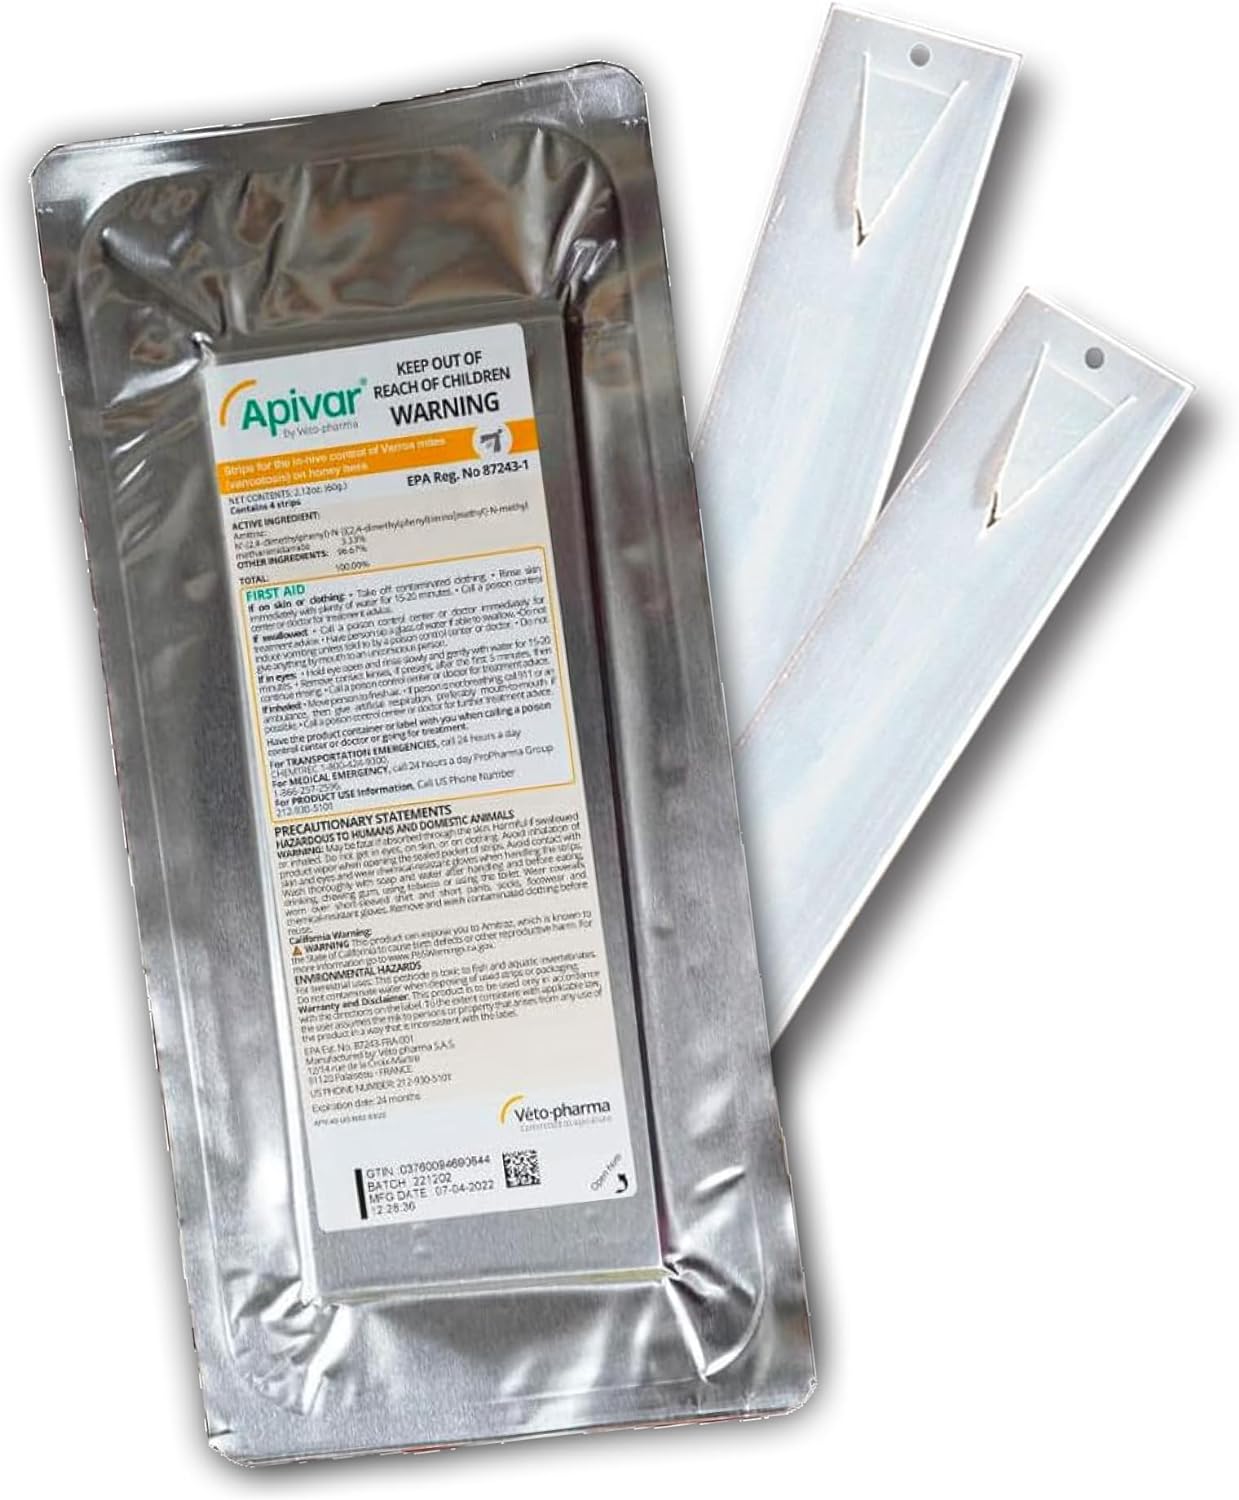 APIVAR 4 Pack - Varroa Mite Treatment